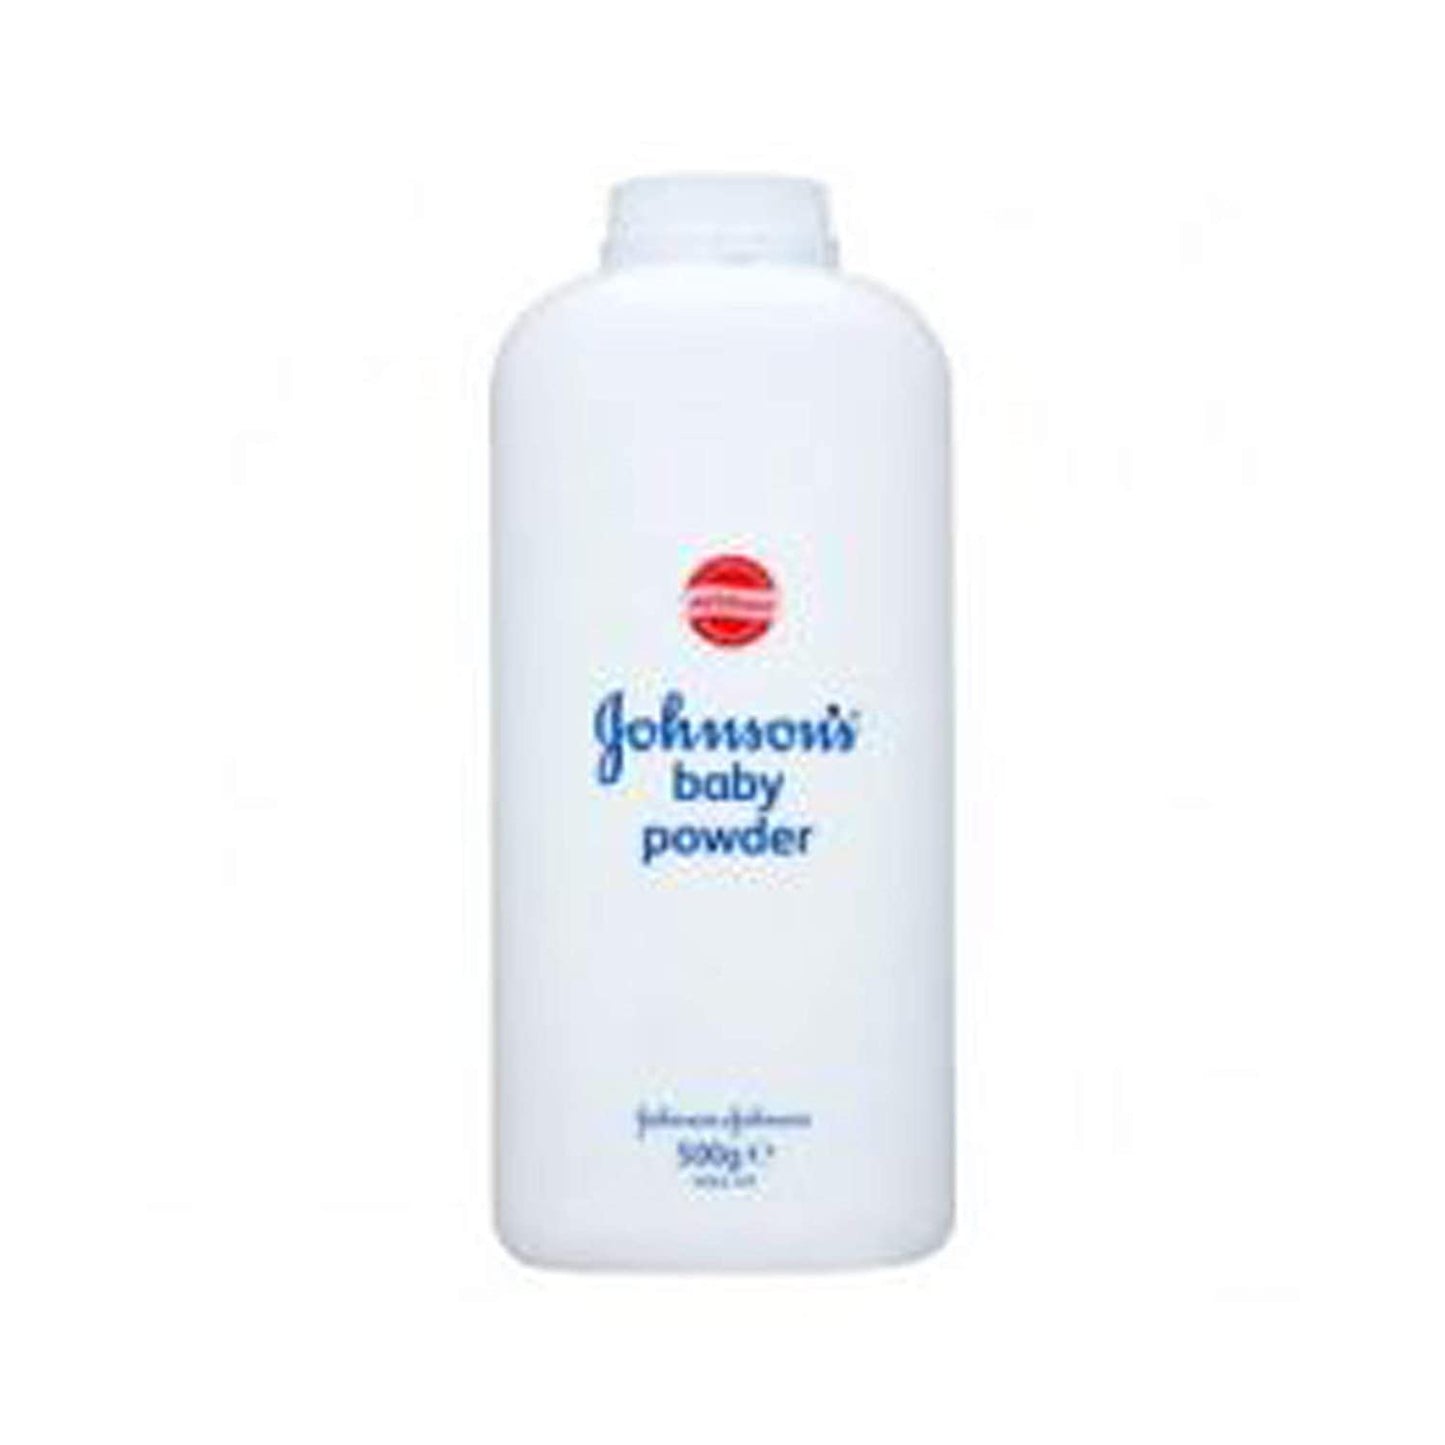 Johnsons baby powder regular-500g